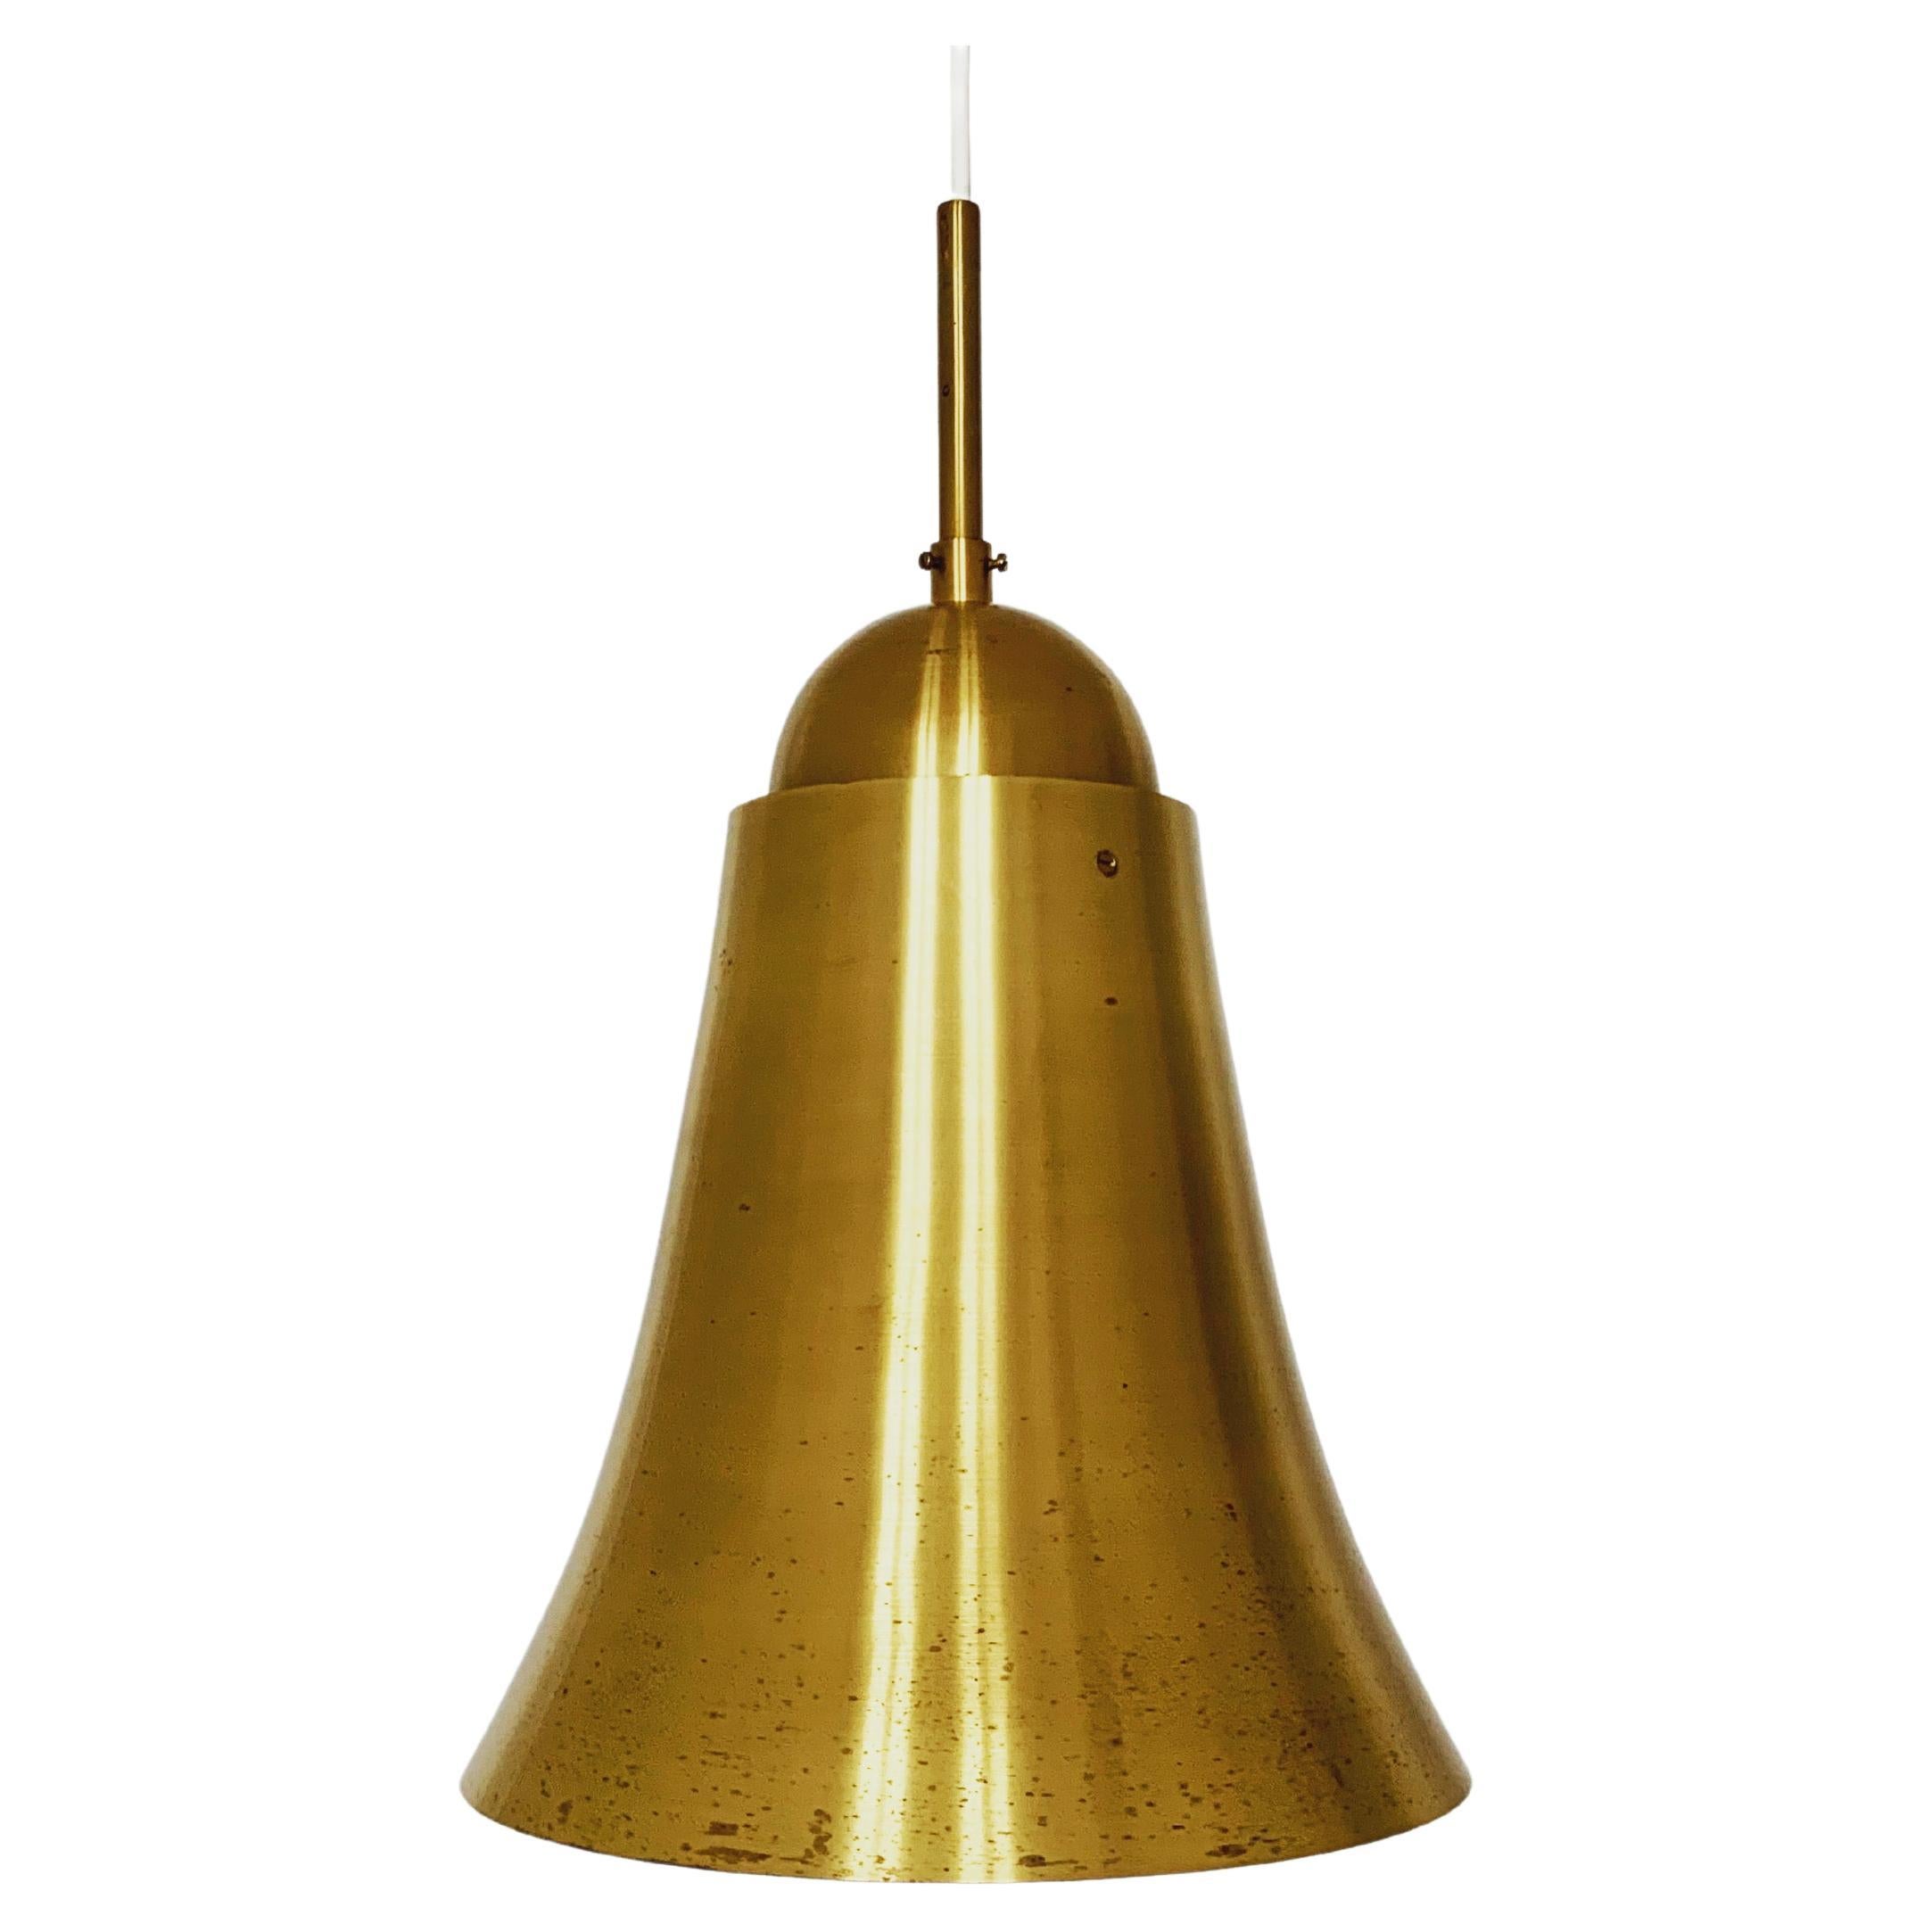 Bell shaped brass pendant lamp